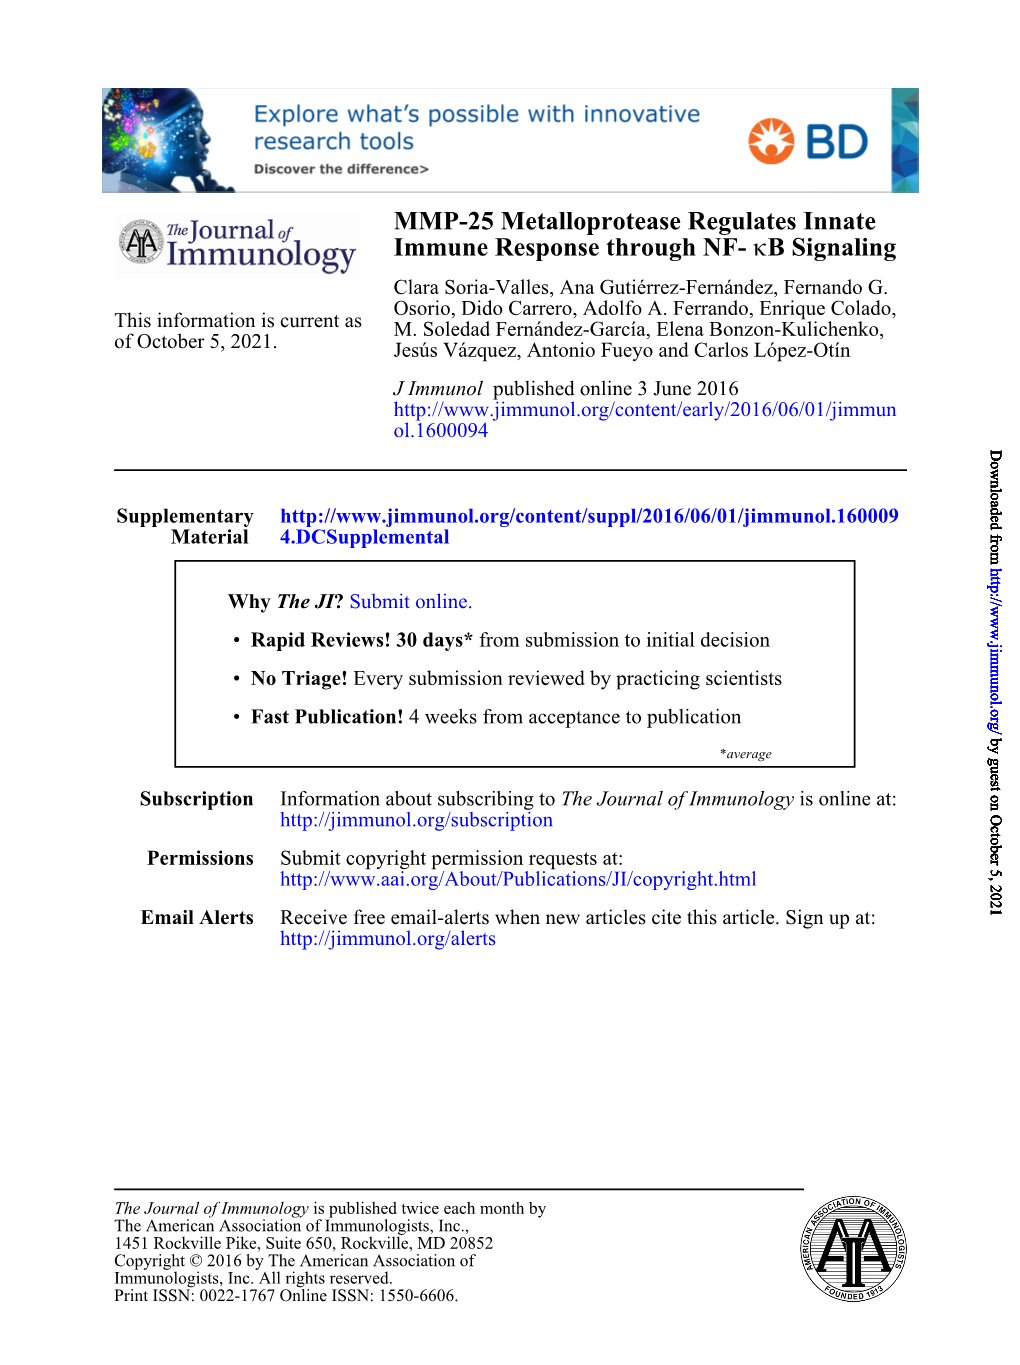 MMP-25 Metalloprotease Regulates Innate Immune Response Through NF- Κb Signaling Clara Soria-Valles, Ana Gutiérrez-Fernández, Fernando G